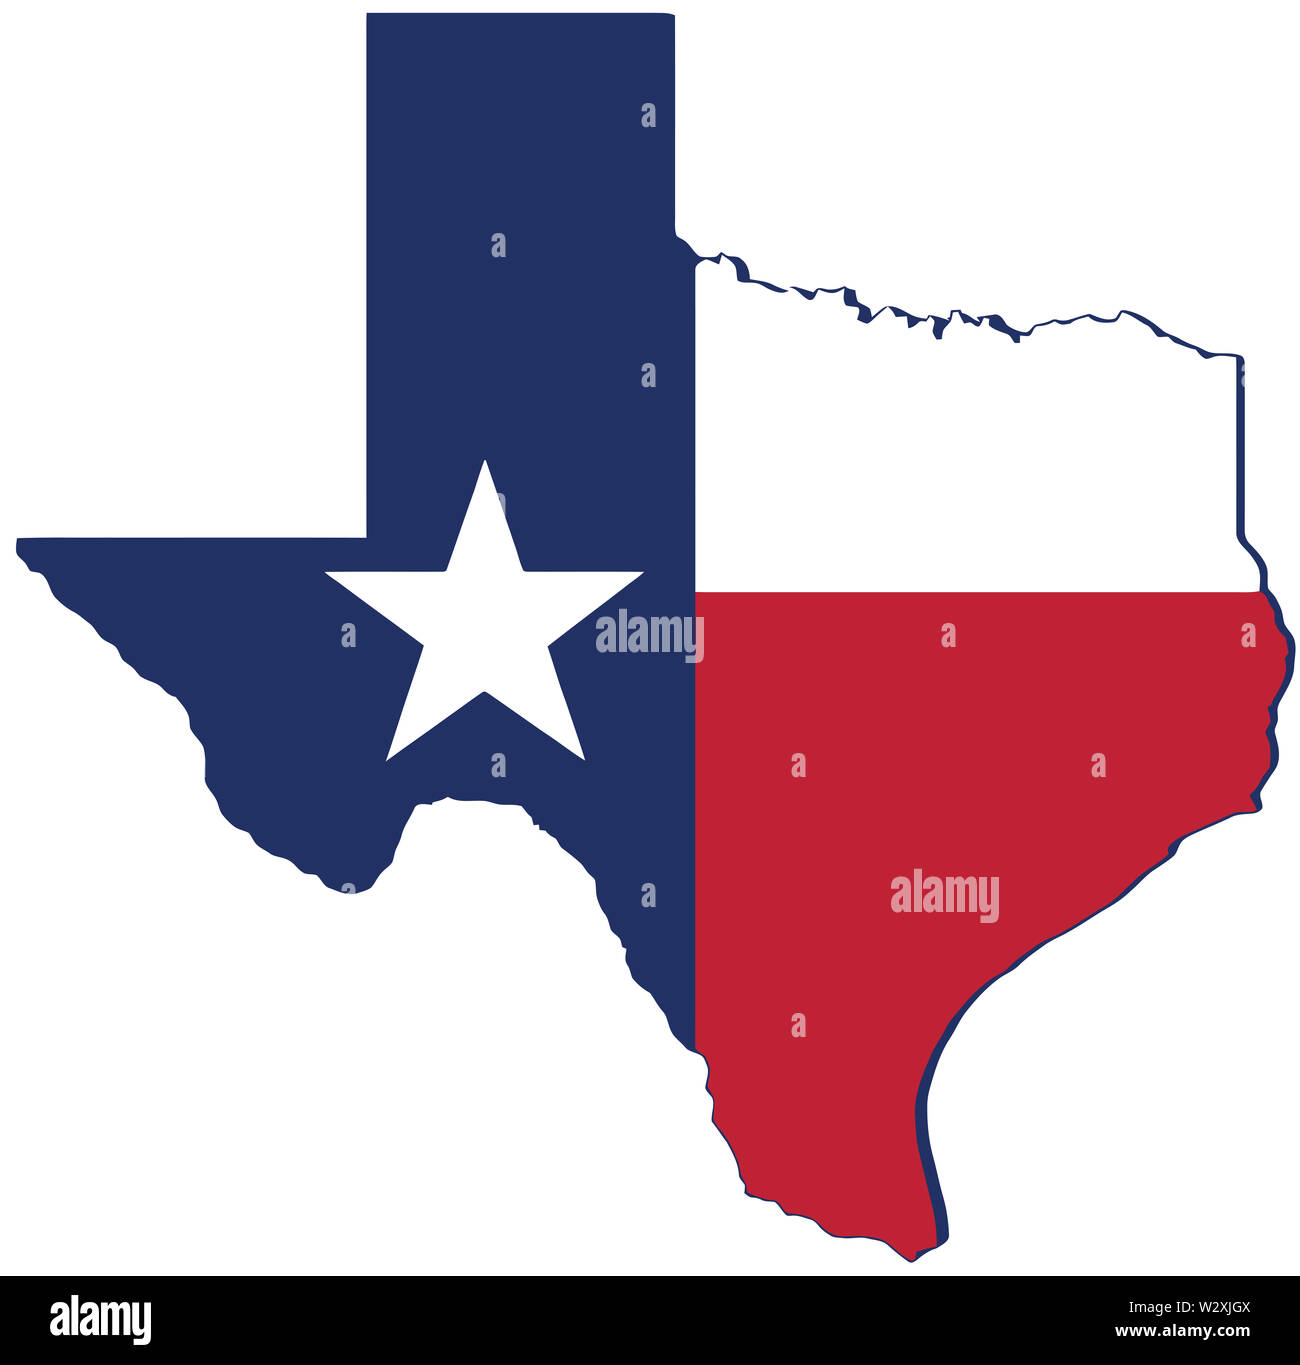 texas flag state map border illustration Stock Photo